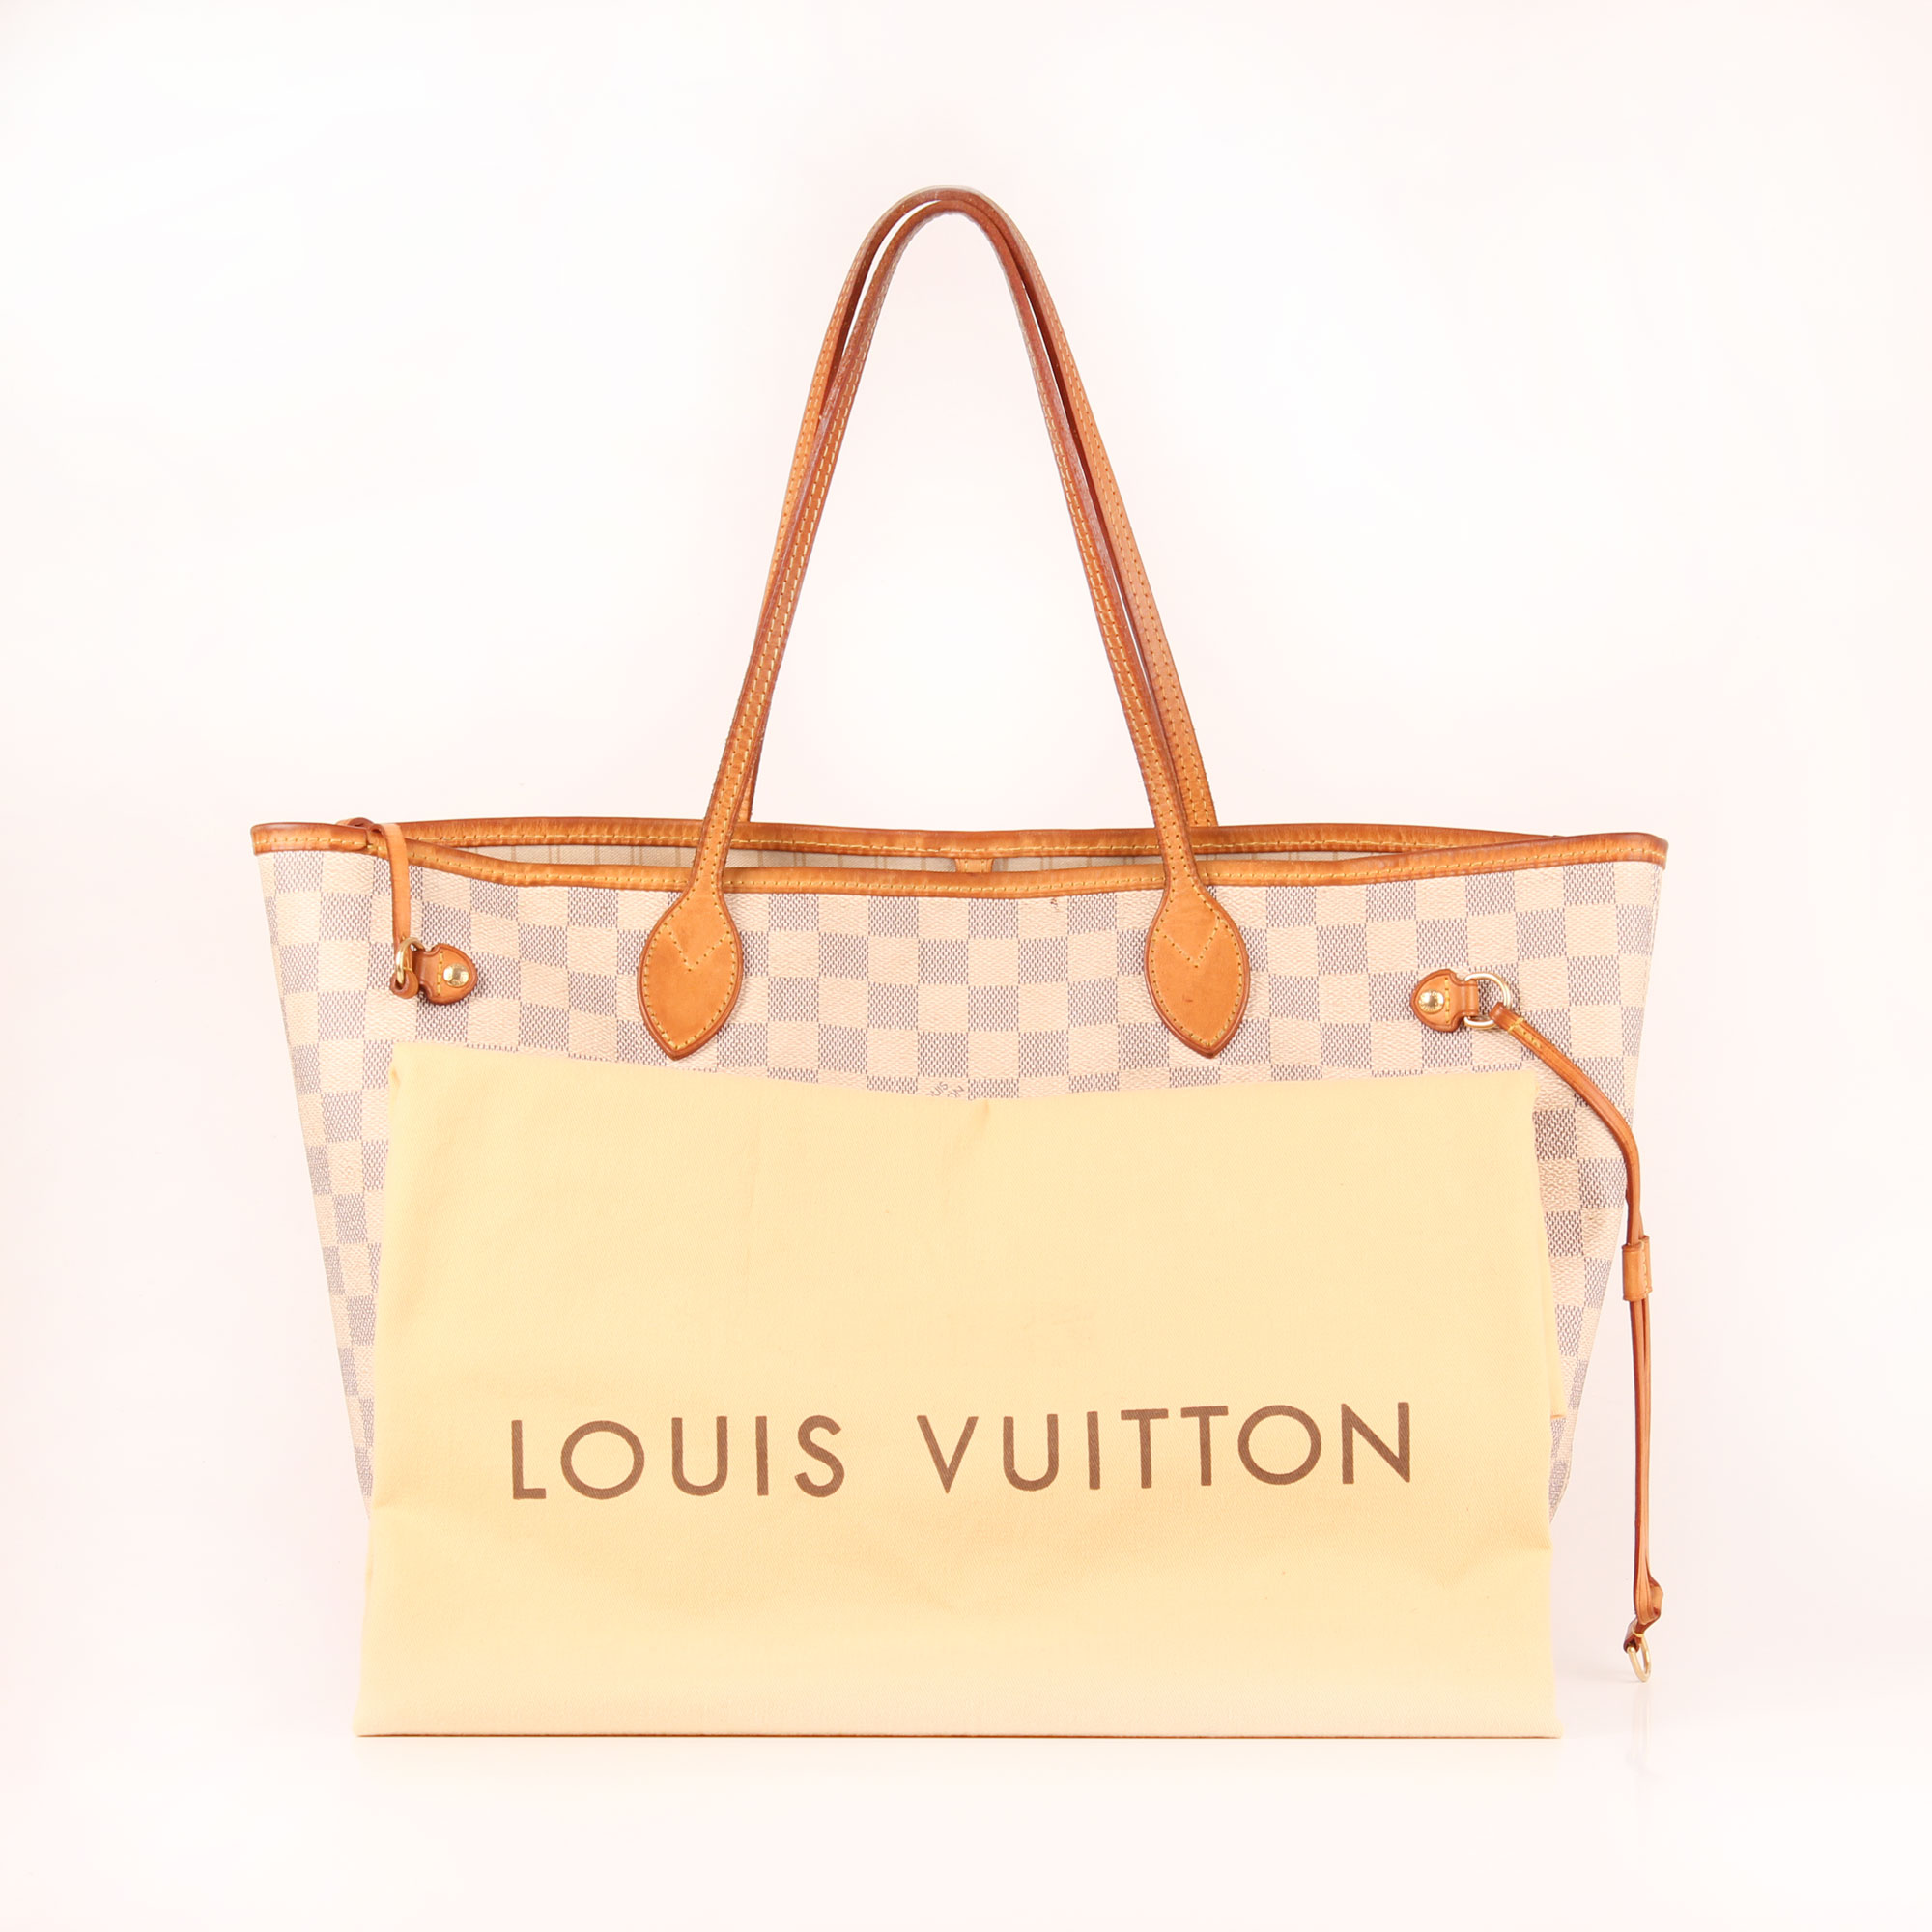 Lusori - Bolso pequeño Louis Vuitton 😍 Informes por mensaje